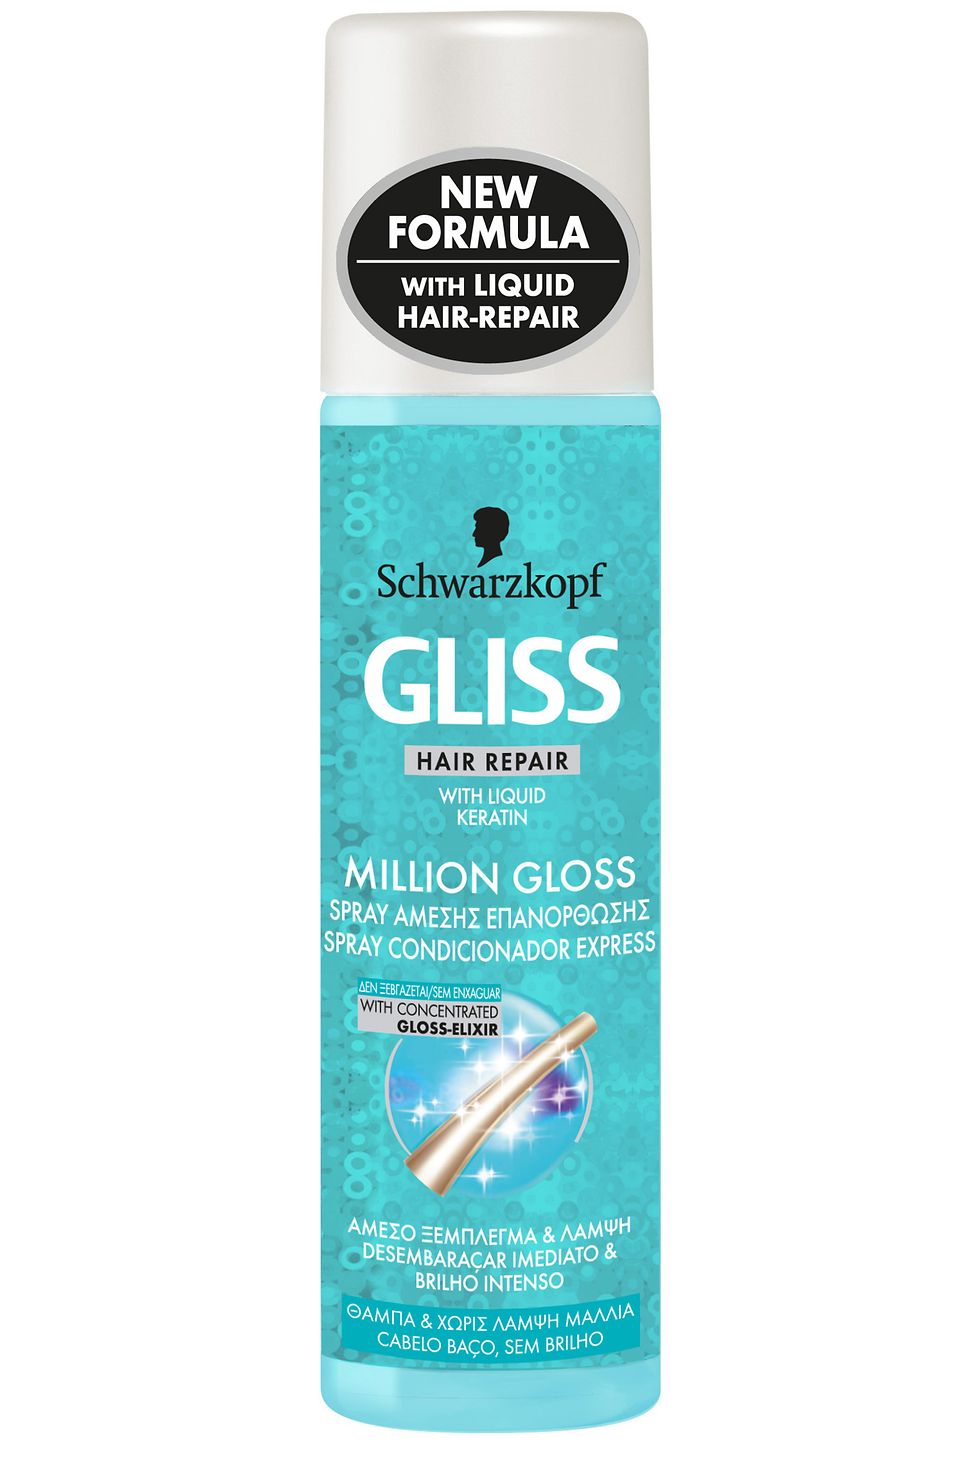 Gliss Million Gloss